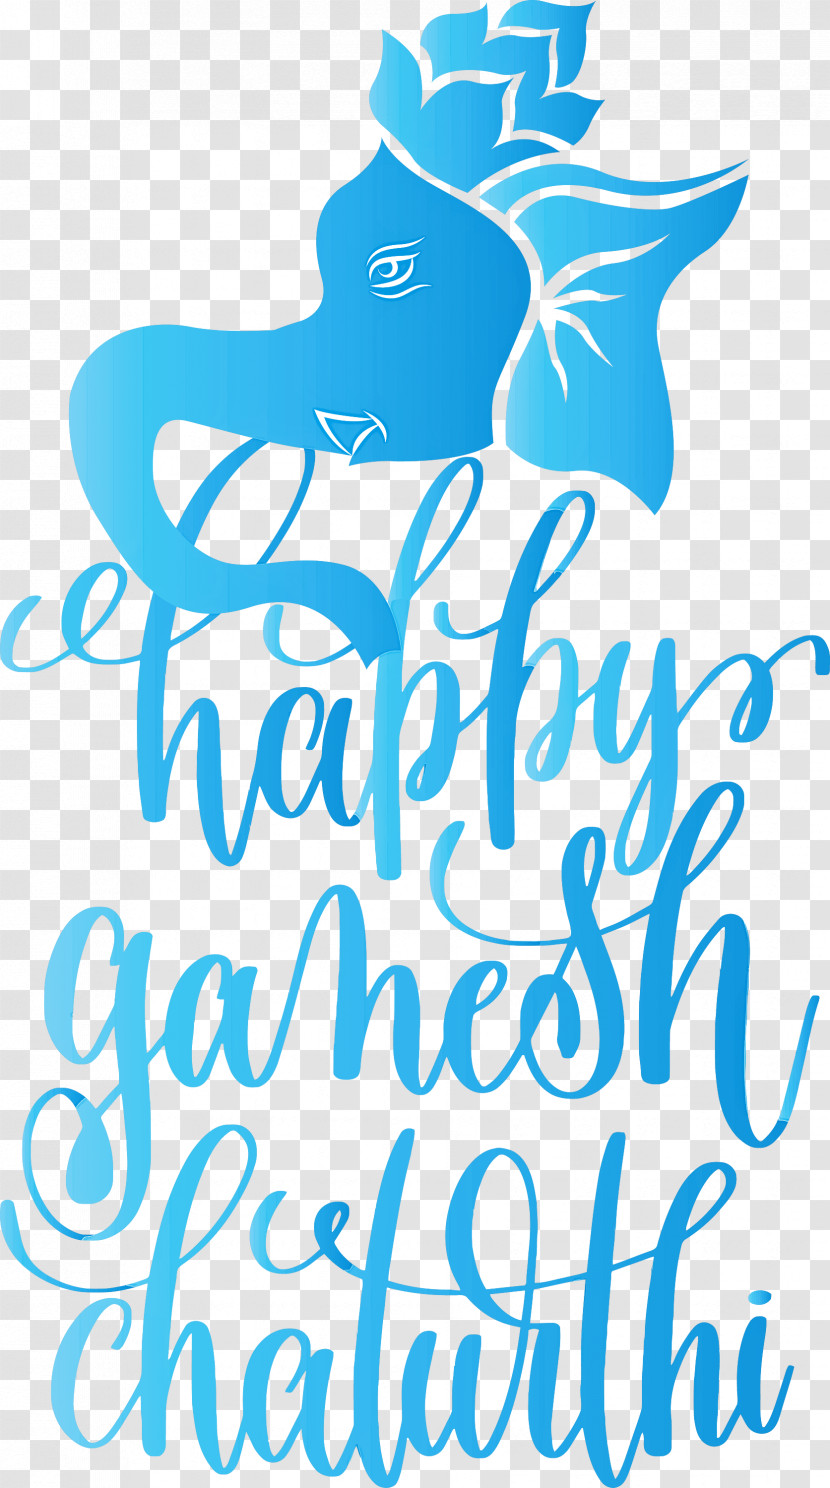 Happy Ganesh Chaturthi Transparent PNG